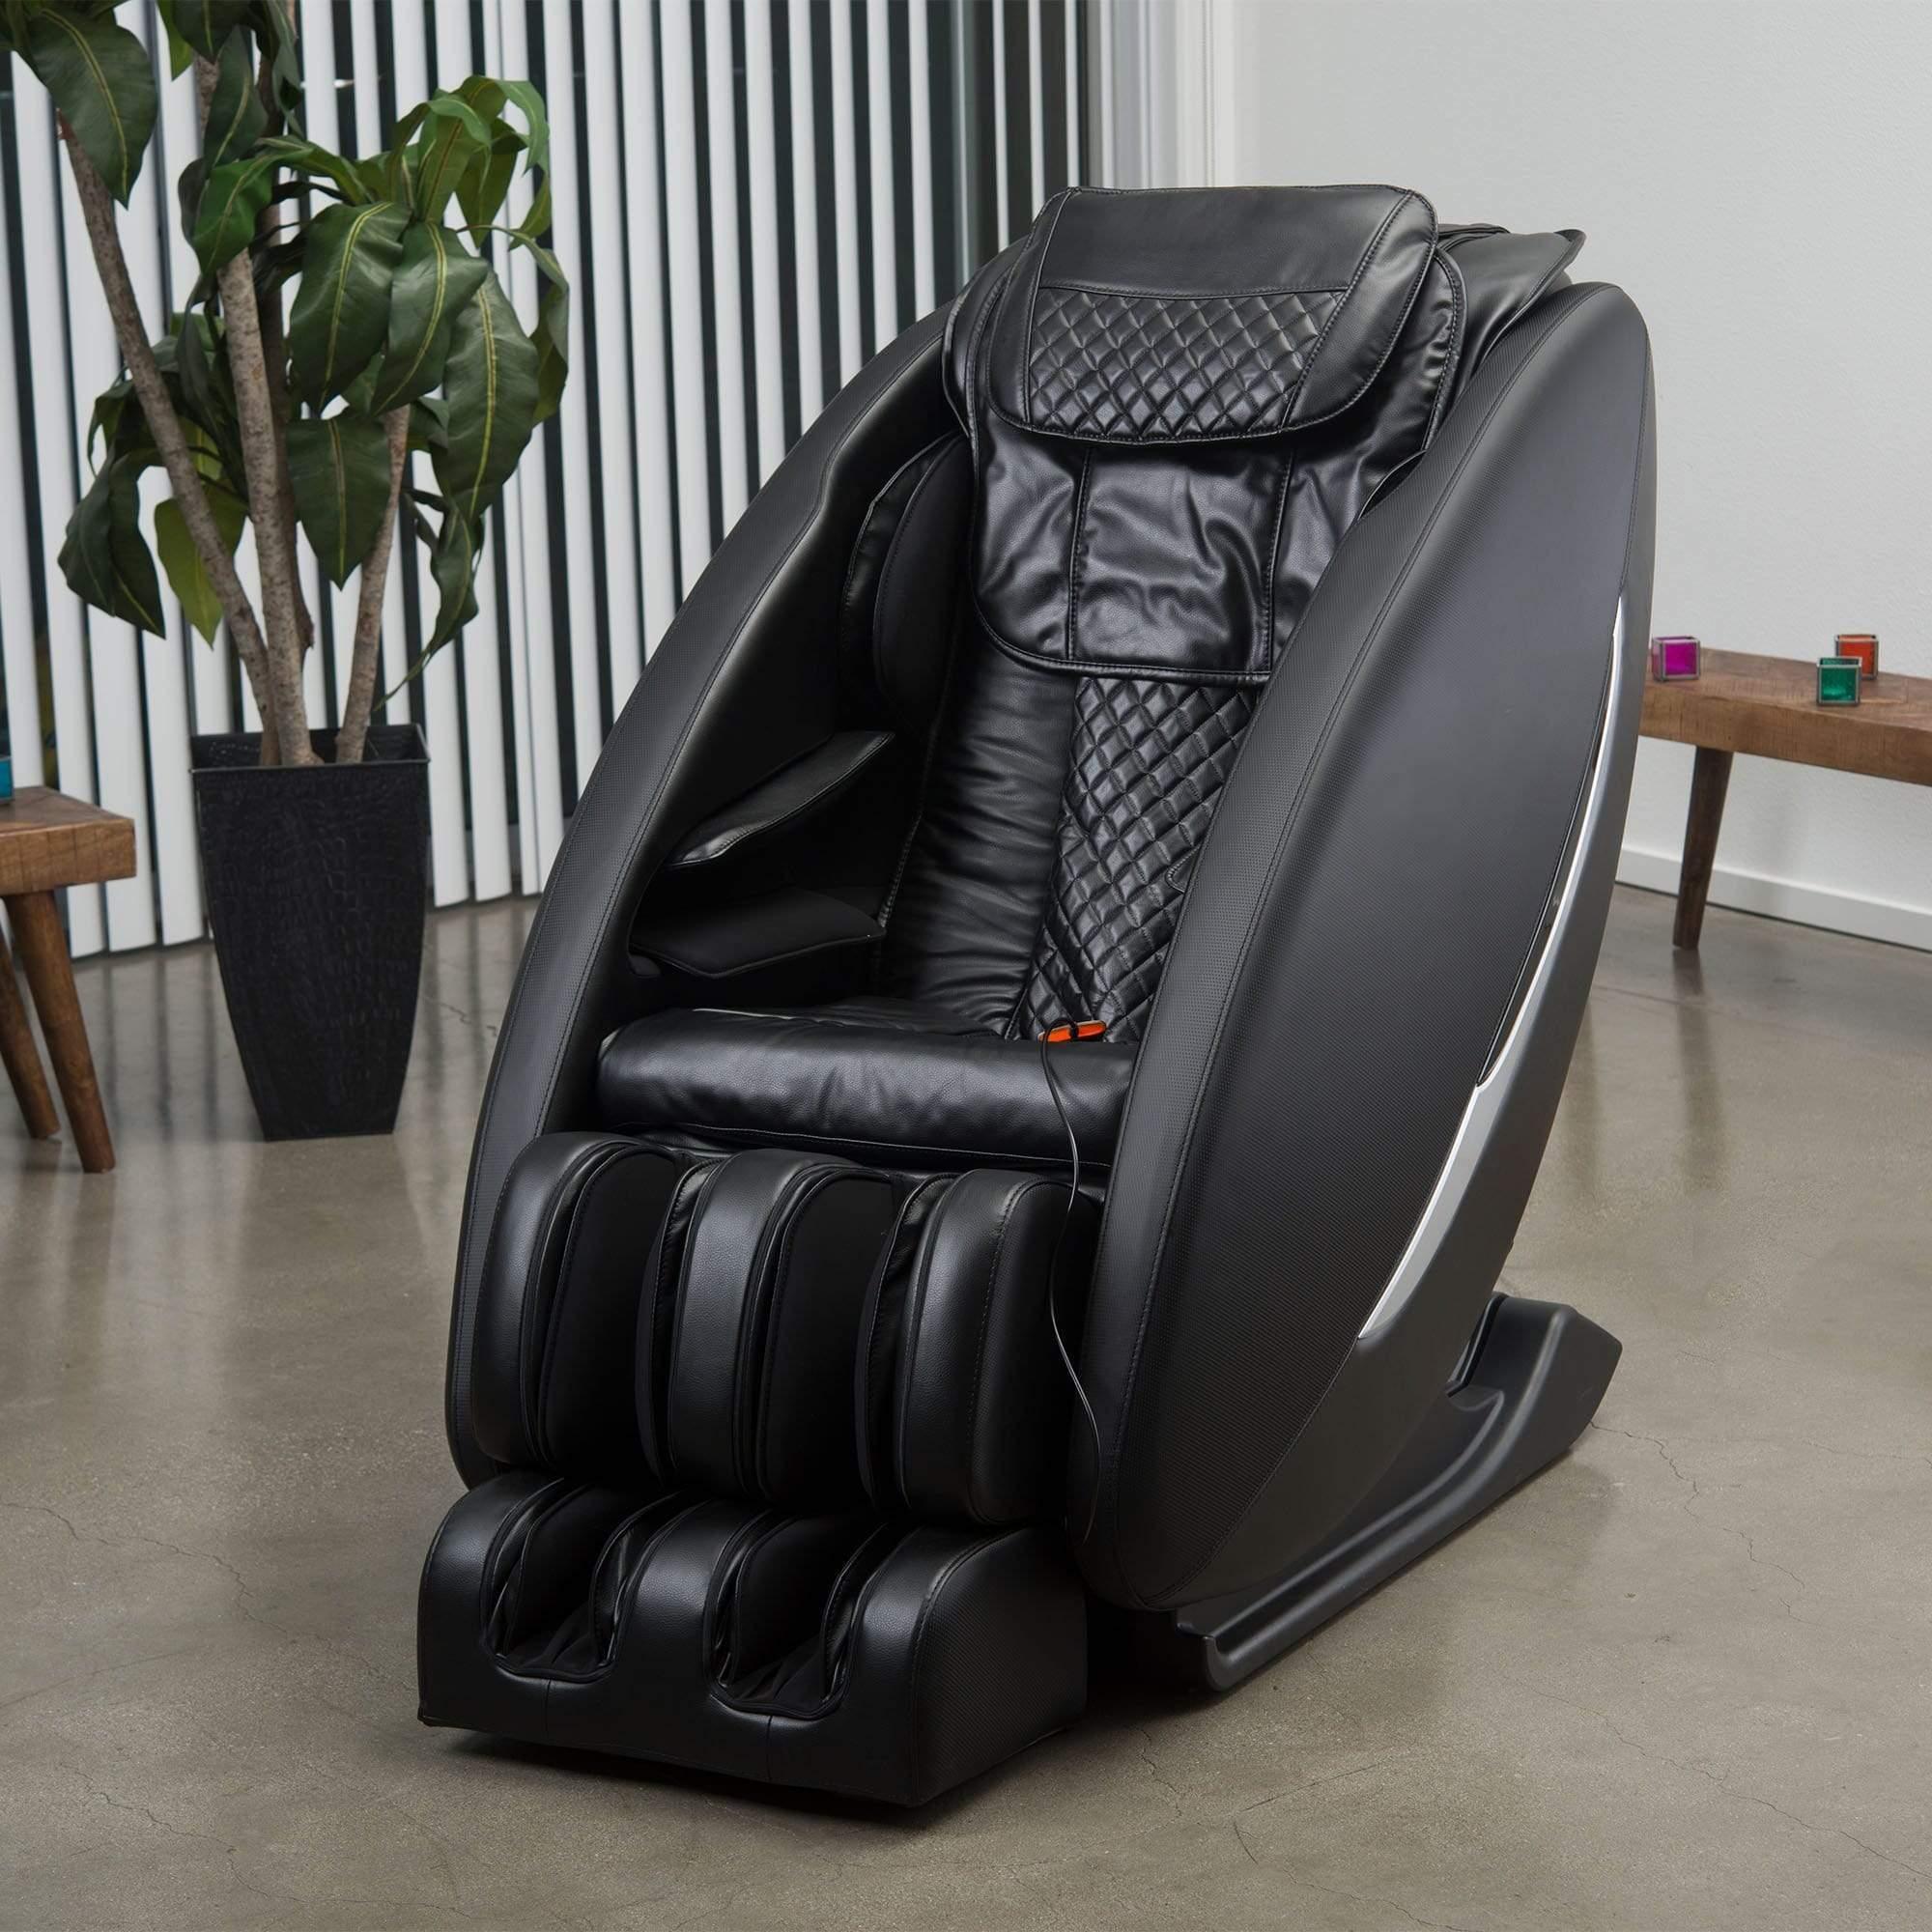 Inner Balance Wellness Massage Chairs